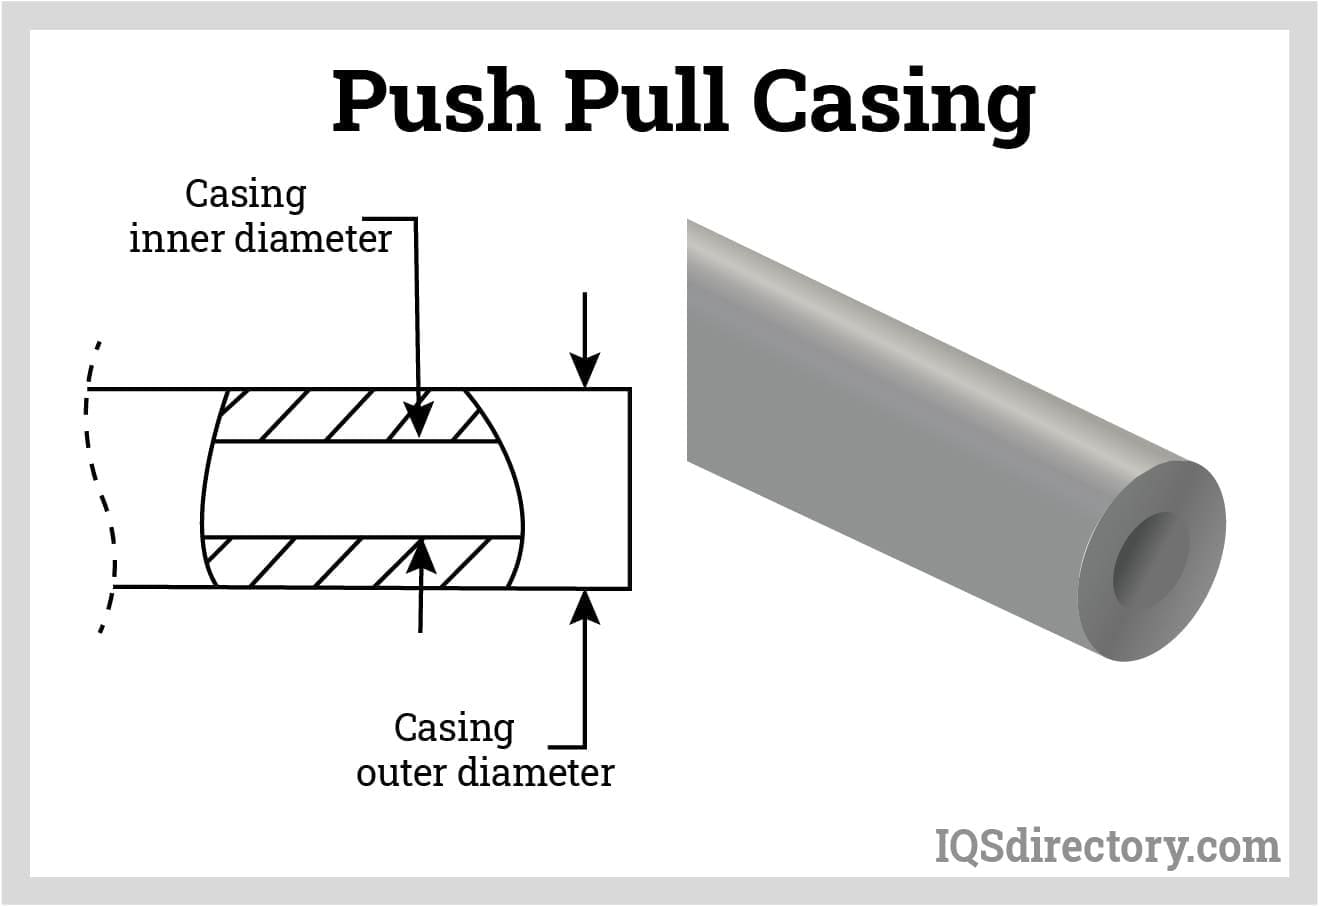 Push Pull Casing